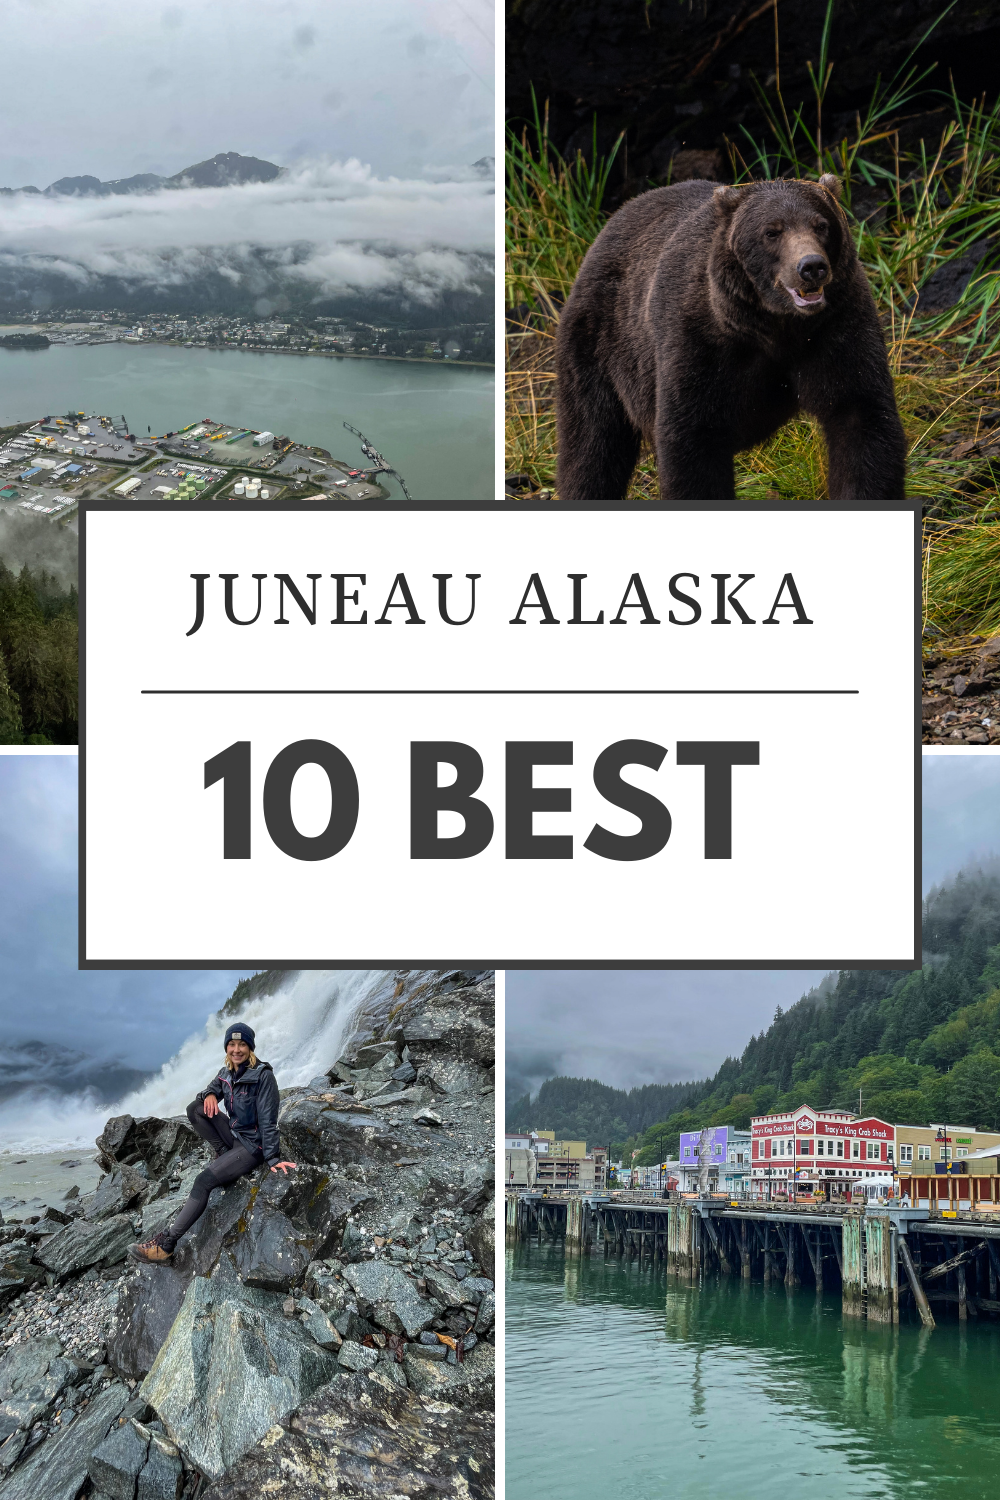 10 best things to do in Juneau alaska  #alaska #travel #wildlife